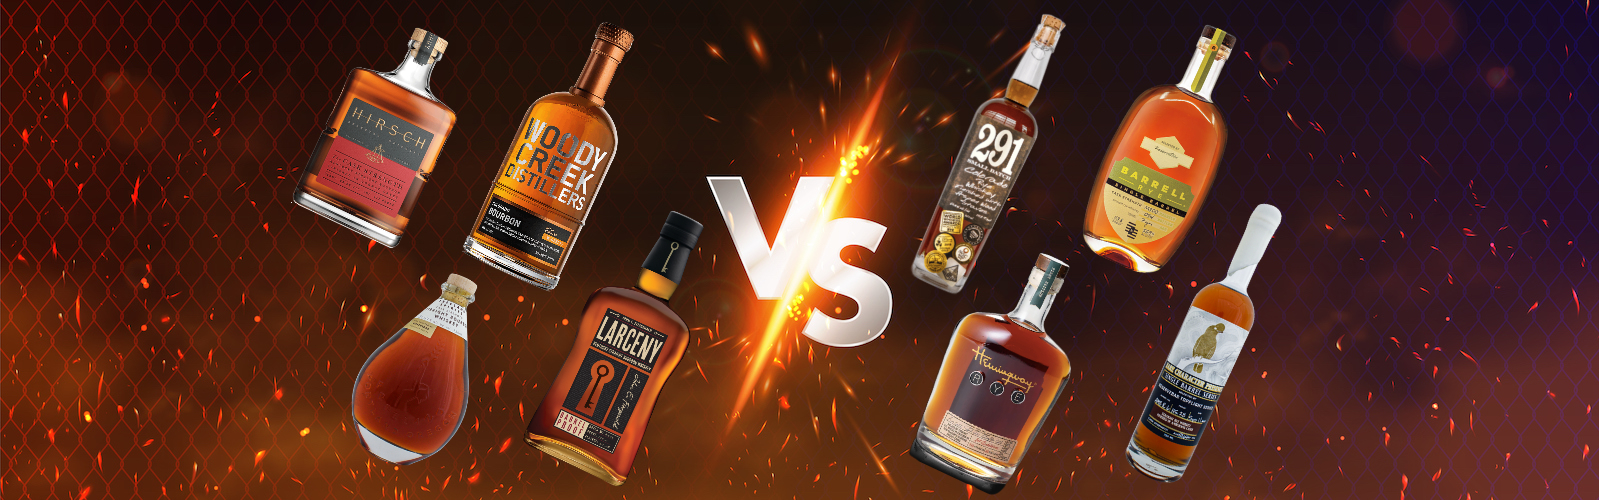 Bourbon Vs. Rye Whiskey Battle